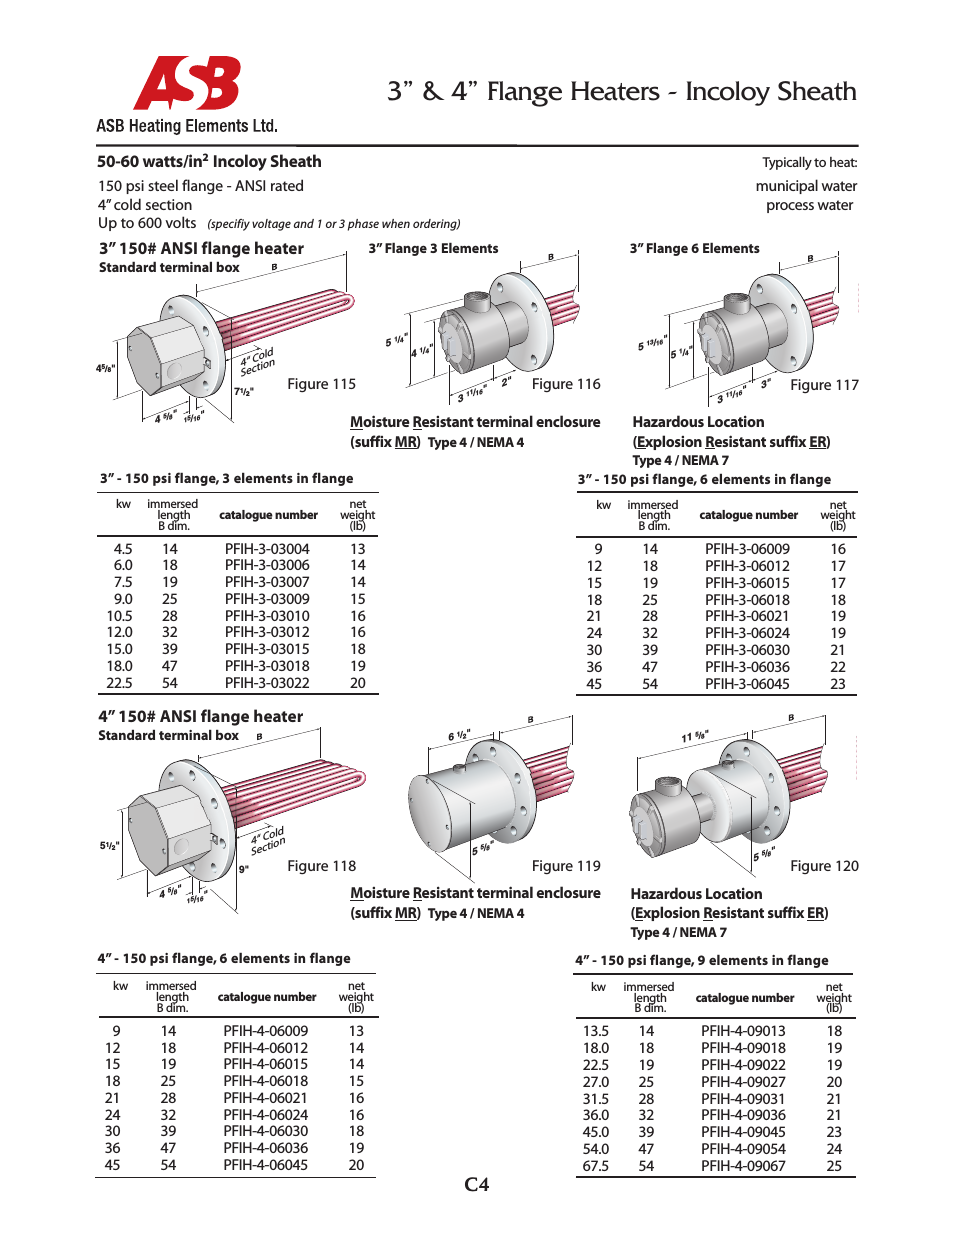 3” & 4” Flange Heaters - 50-60 watts - Incoloy Sheath